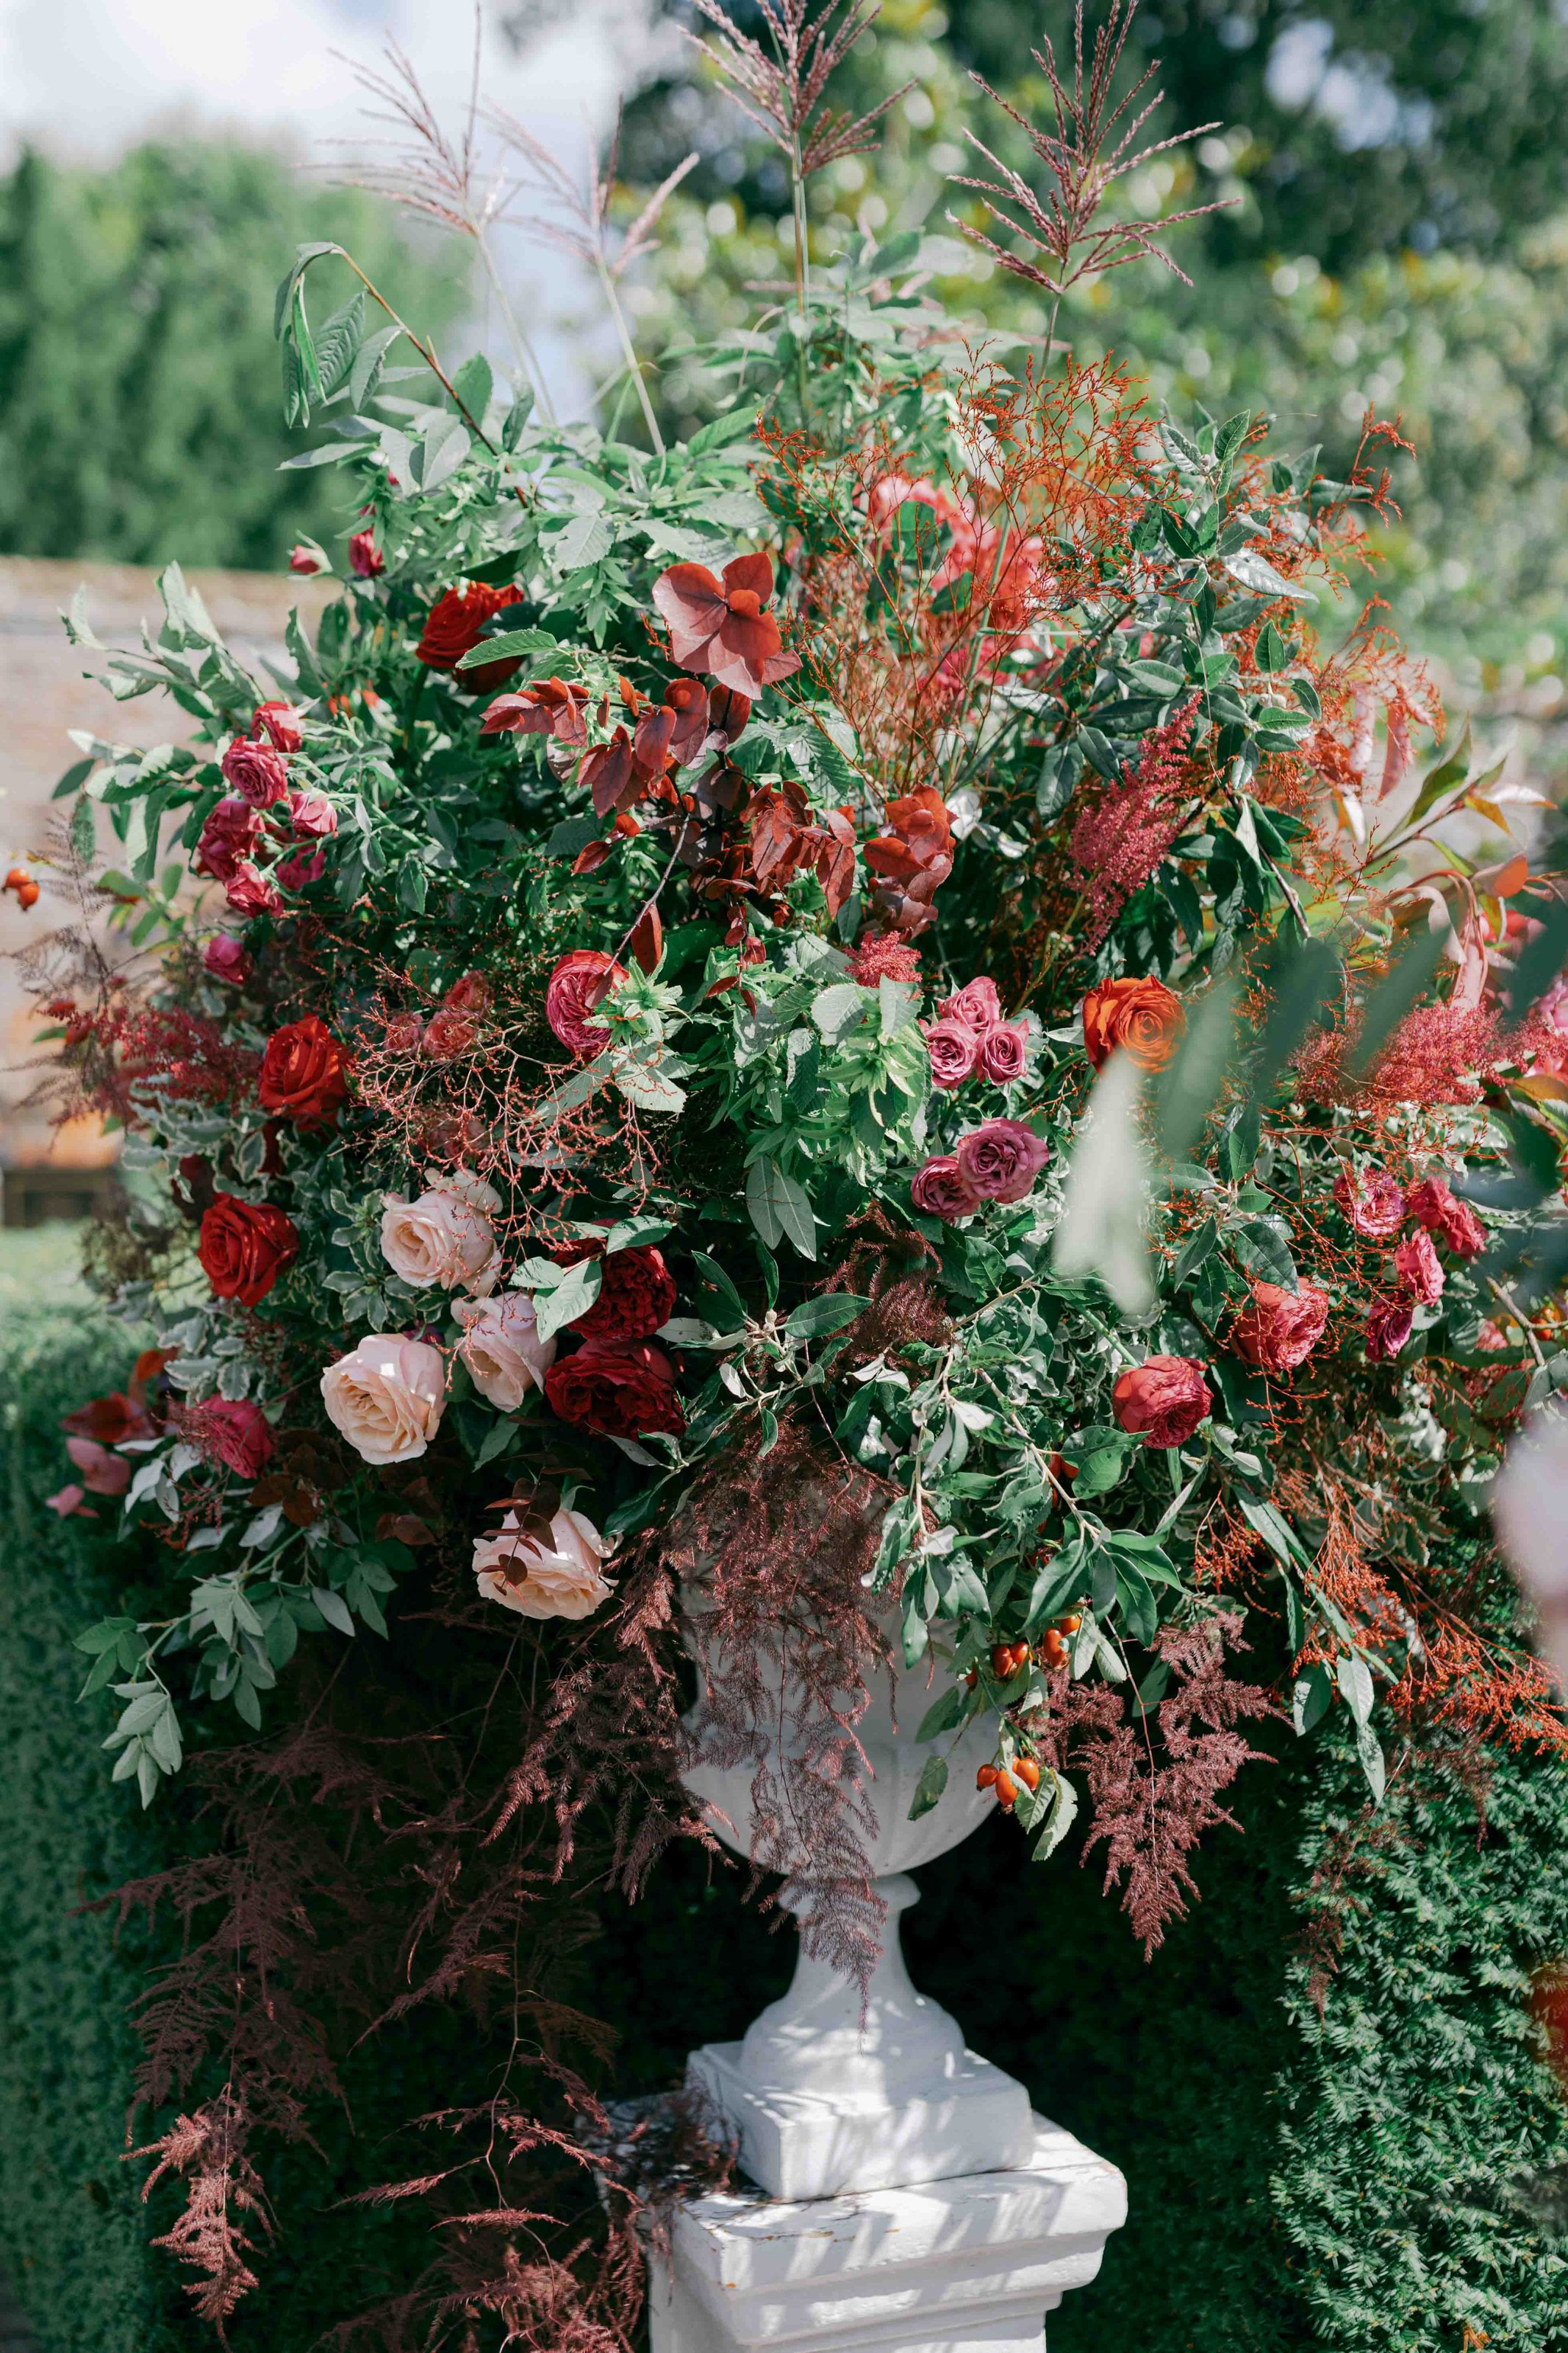  red wedding flowers in large vase 